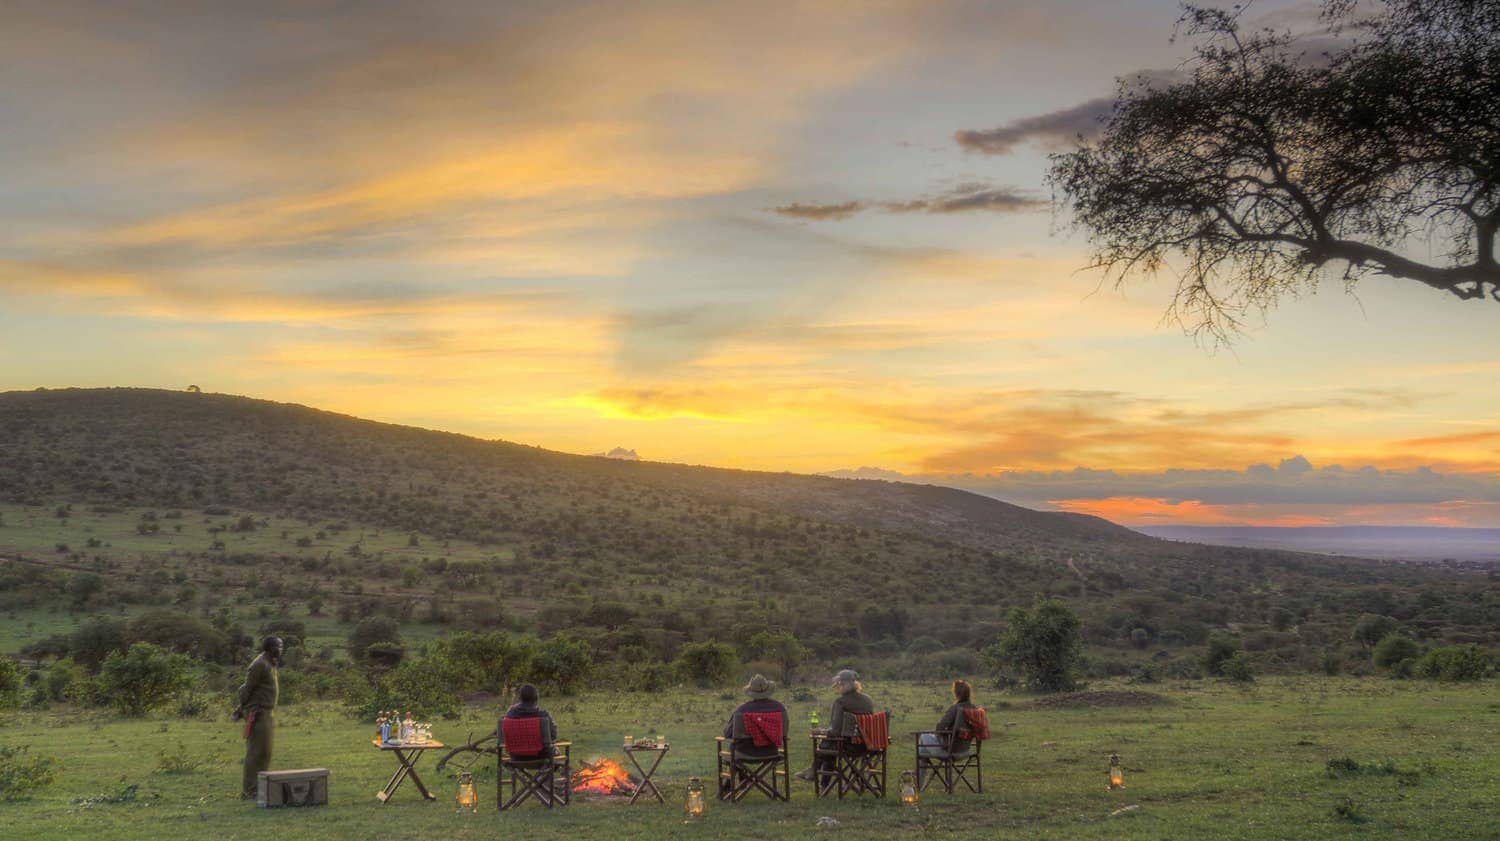 Suset on the plains of Masai Mara